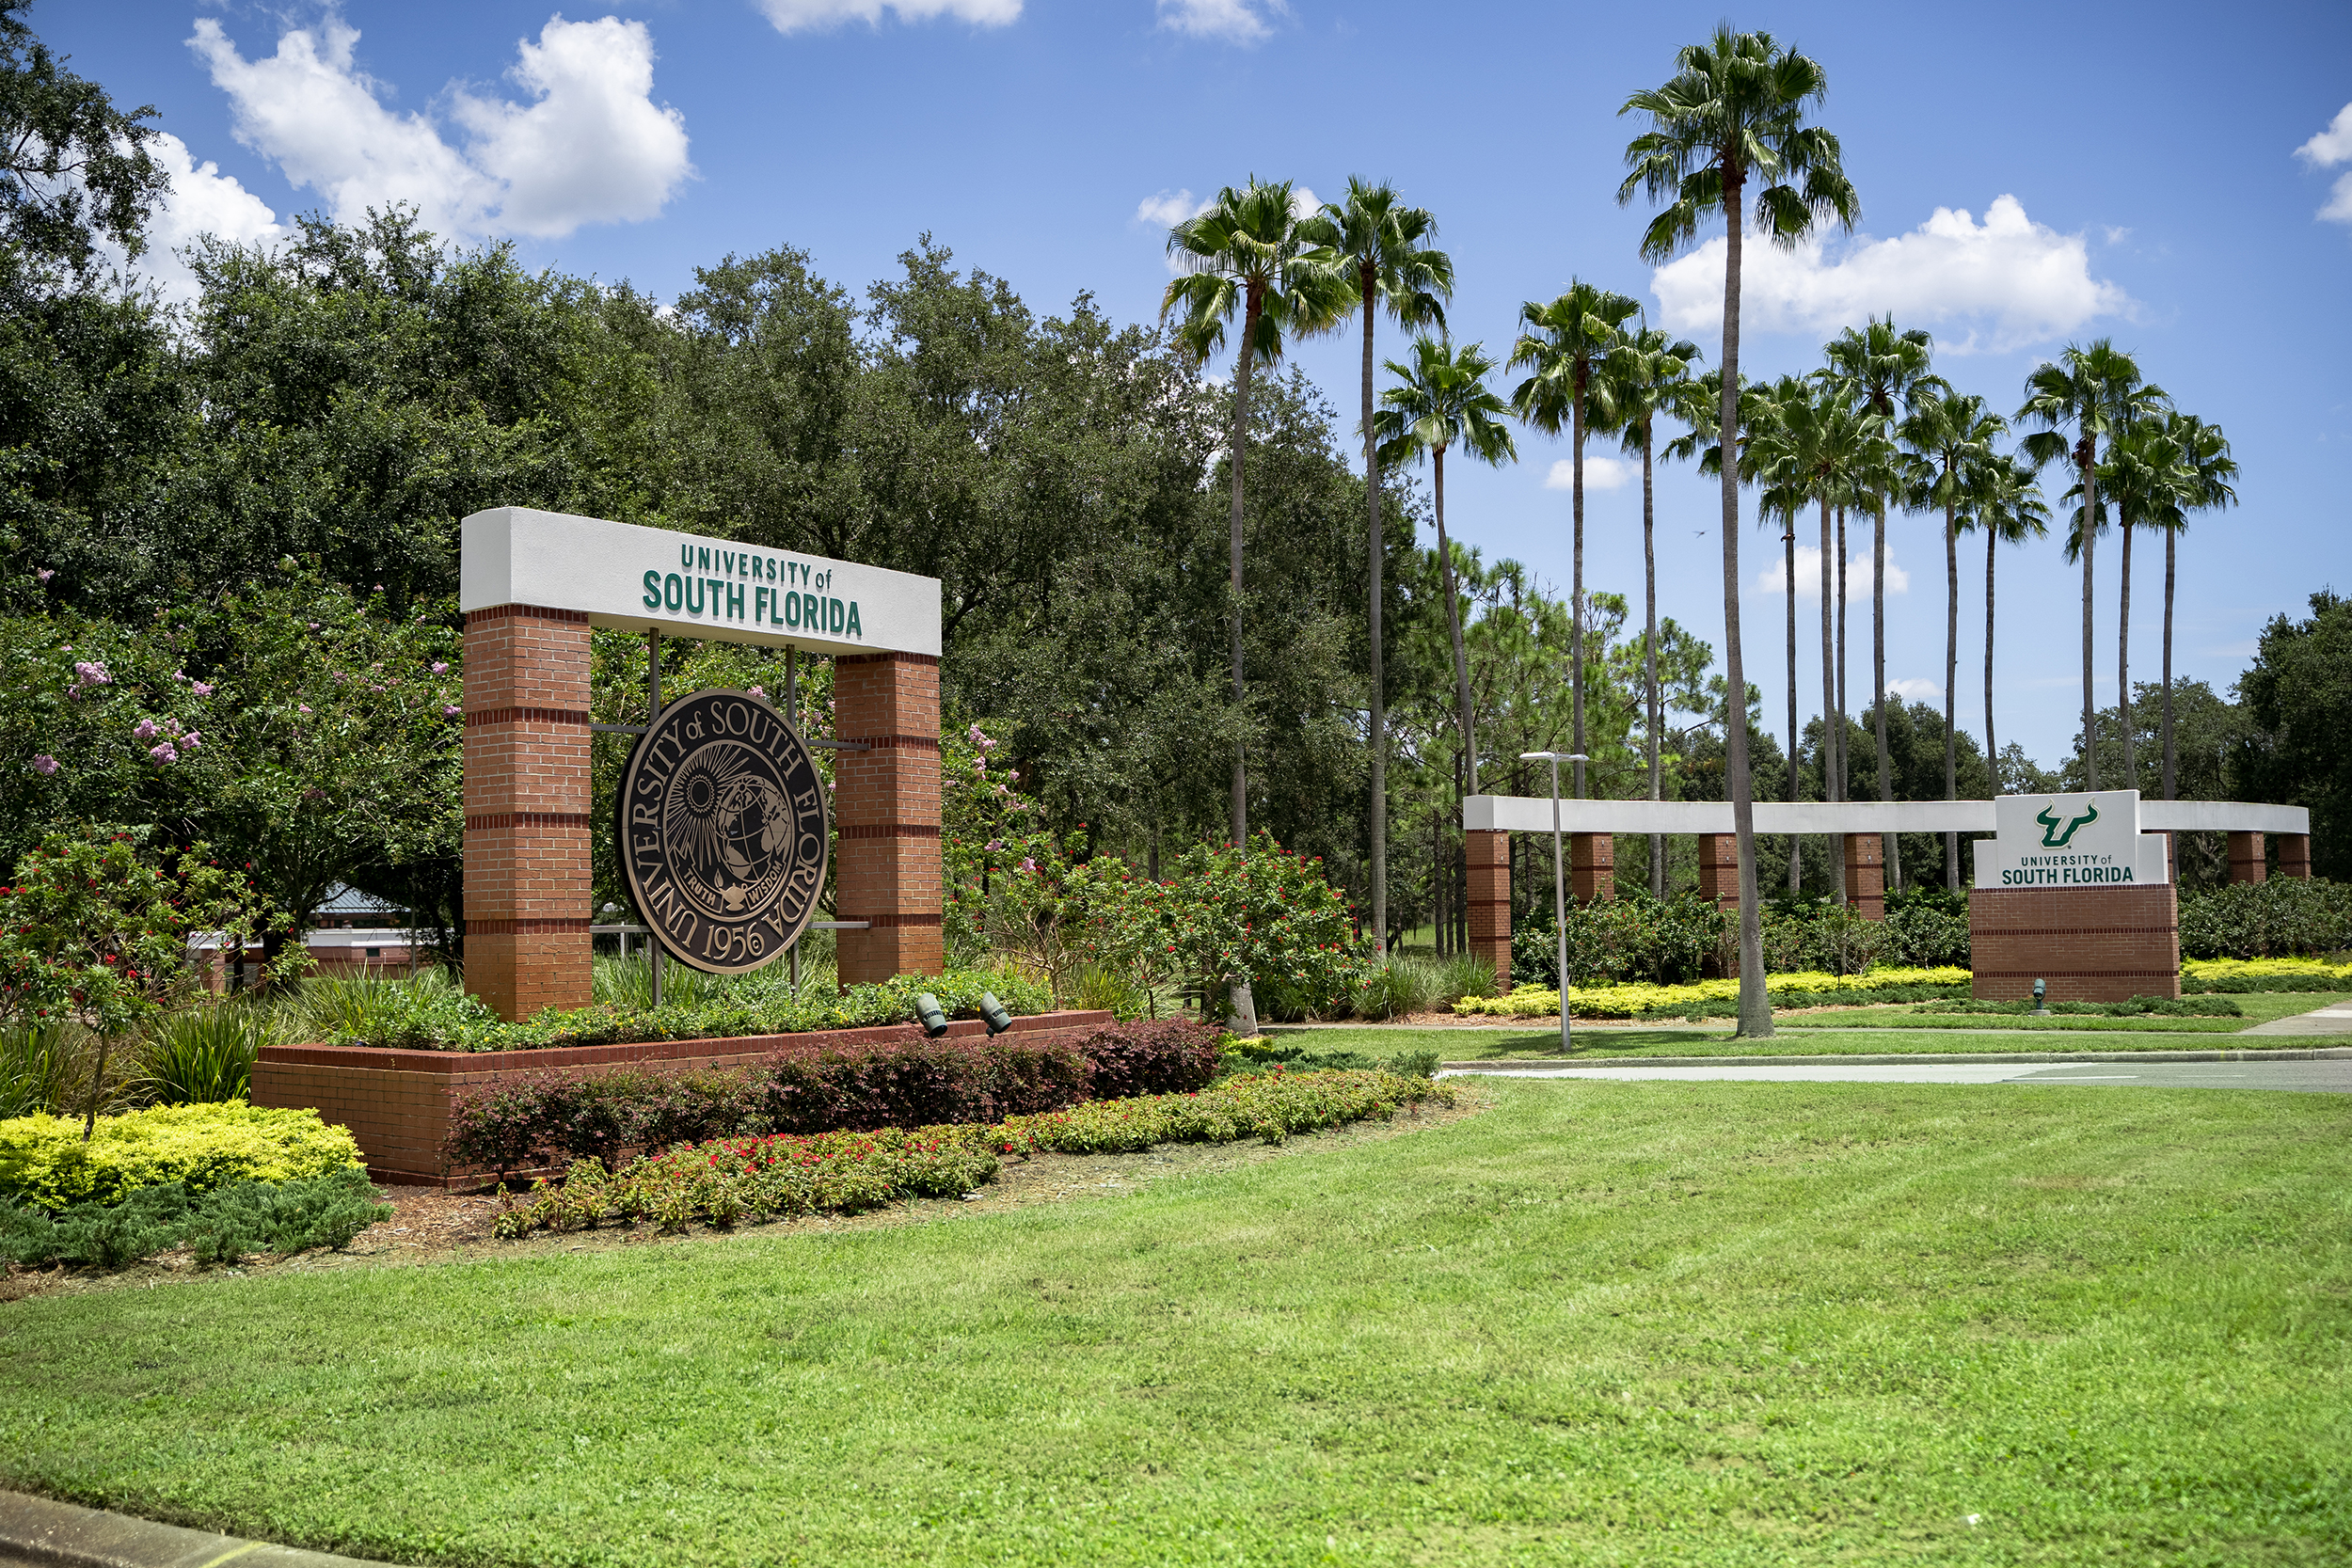 Campus sign at University of South Florida